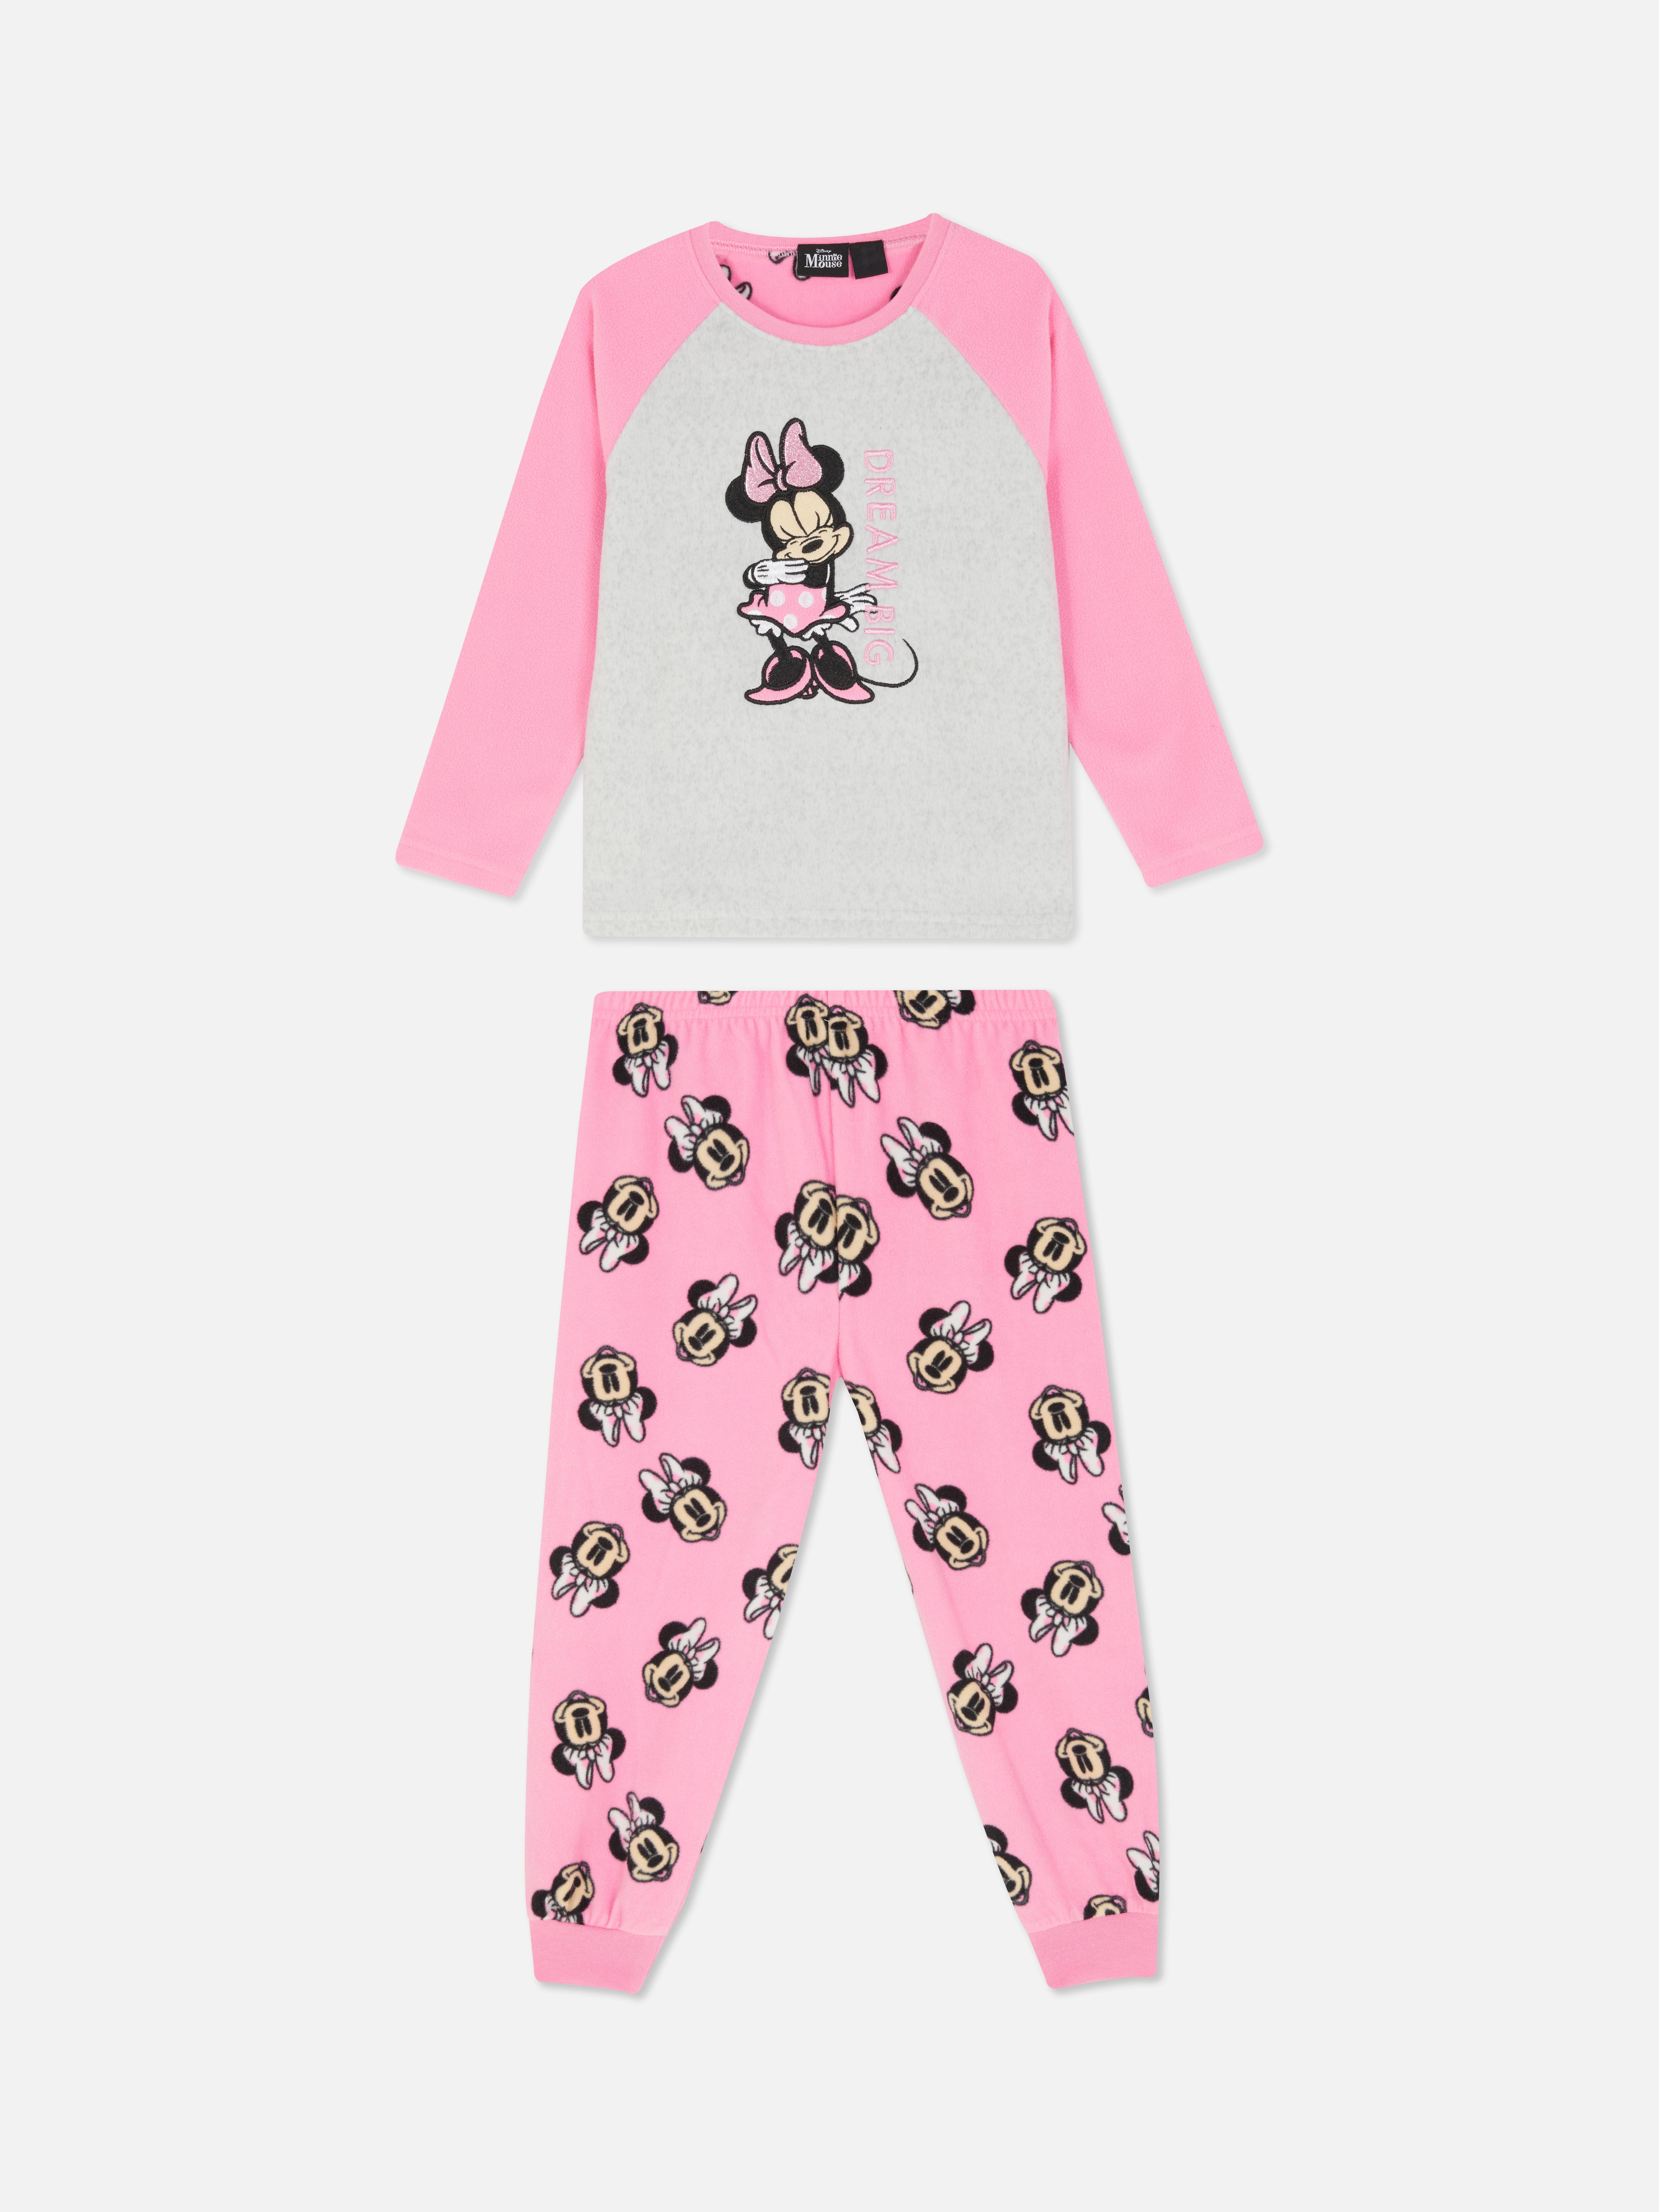 Disney's Minnie Mouse Dream Pyjamas